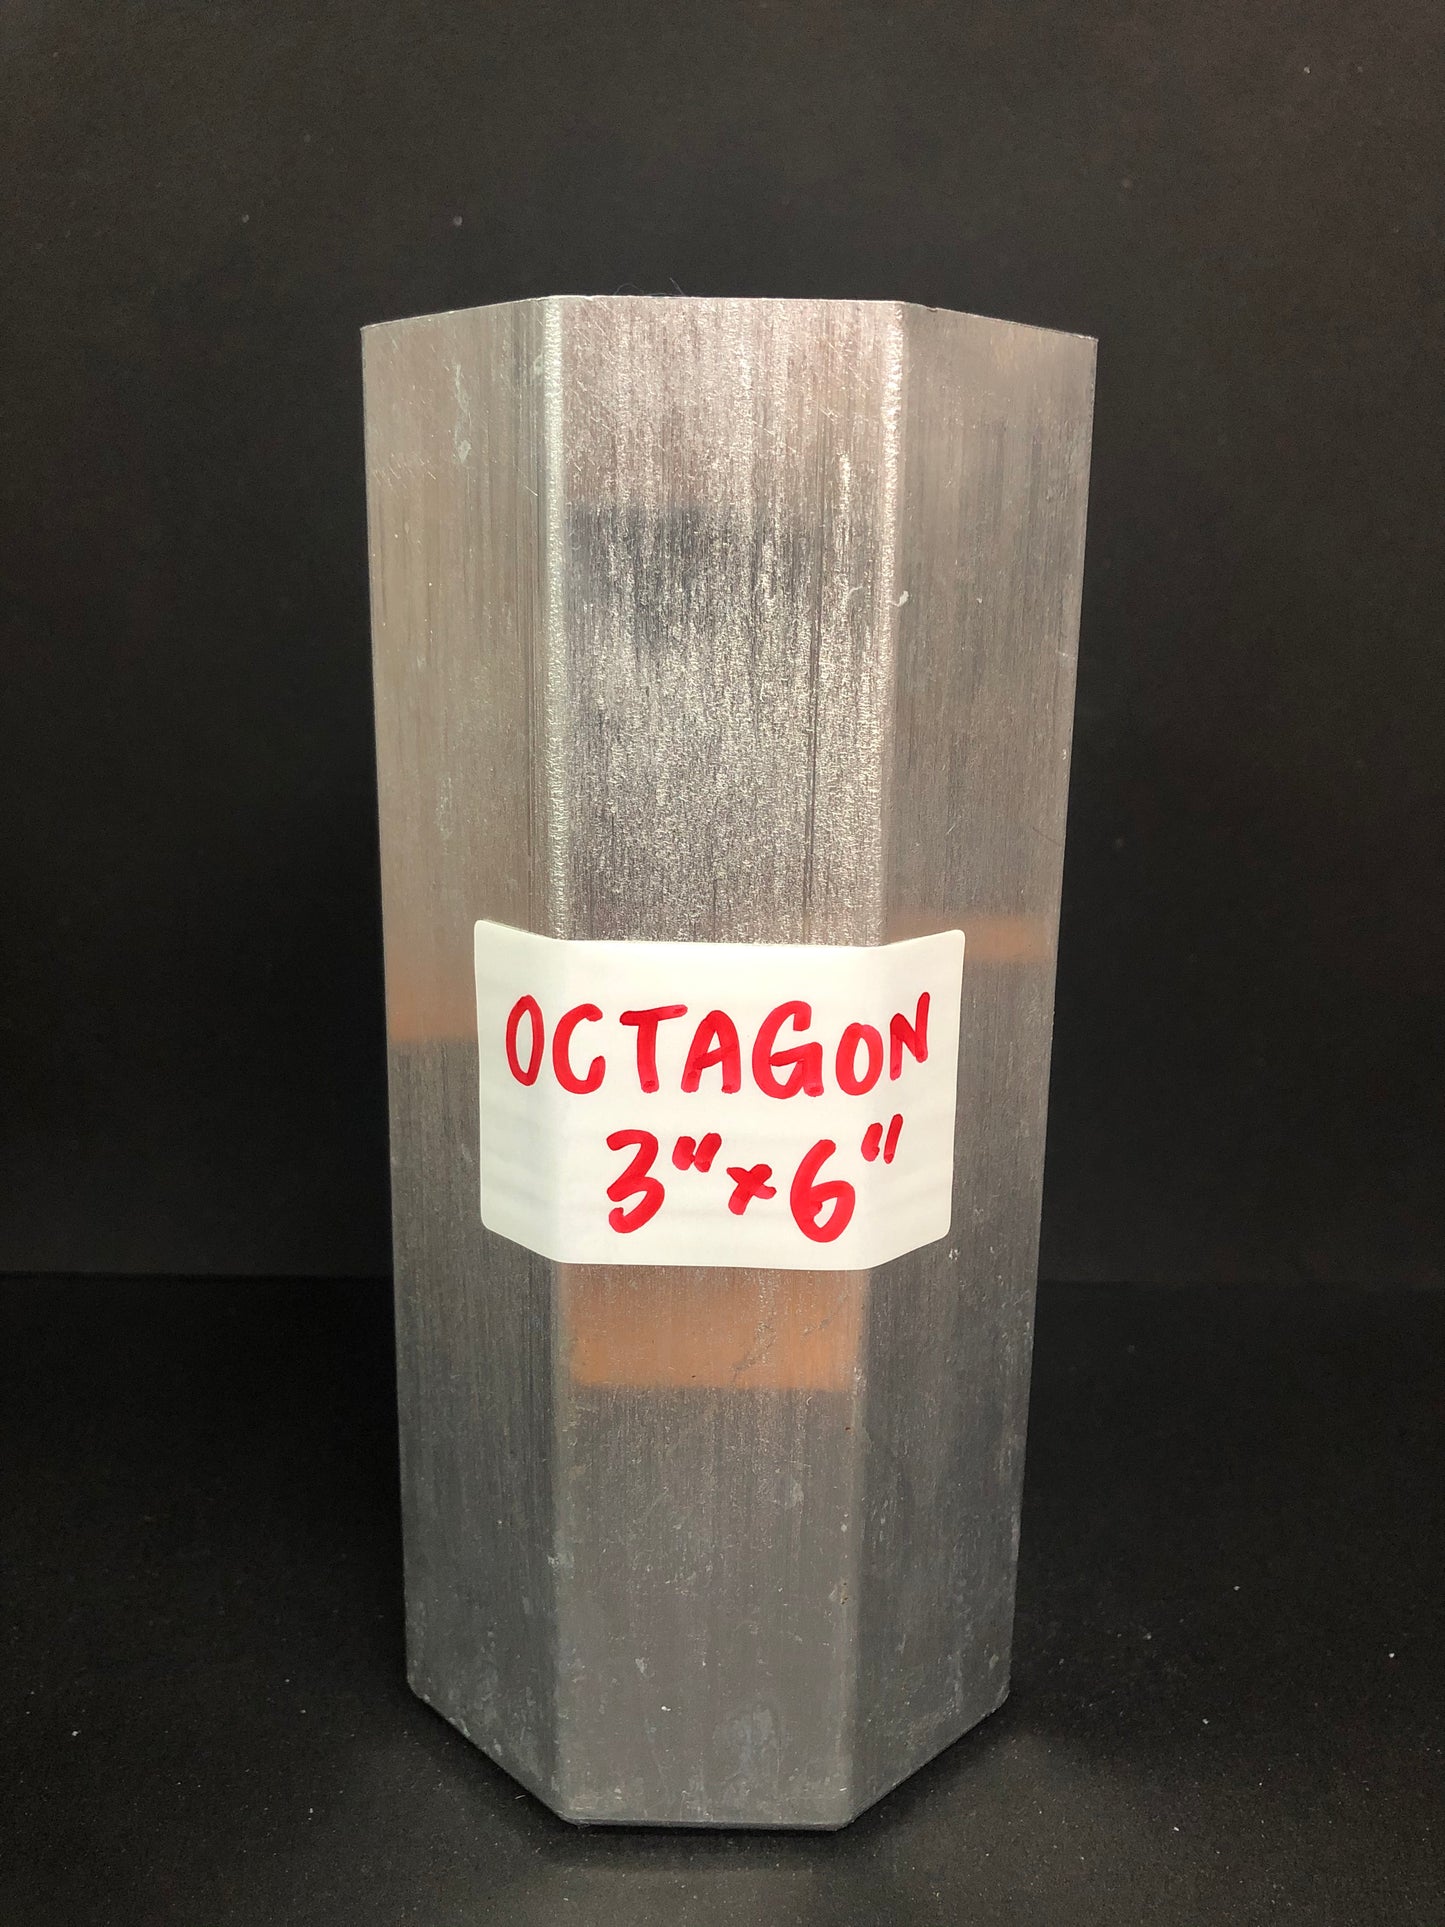 Octagon Aluminium Candle Mold